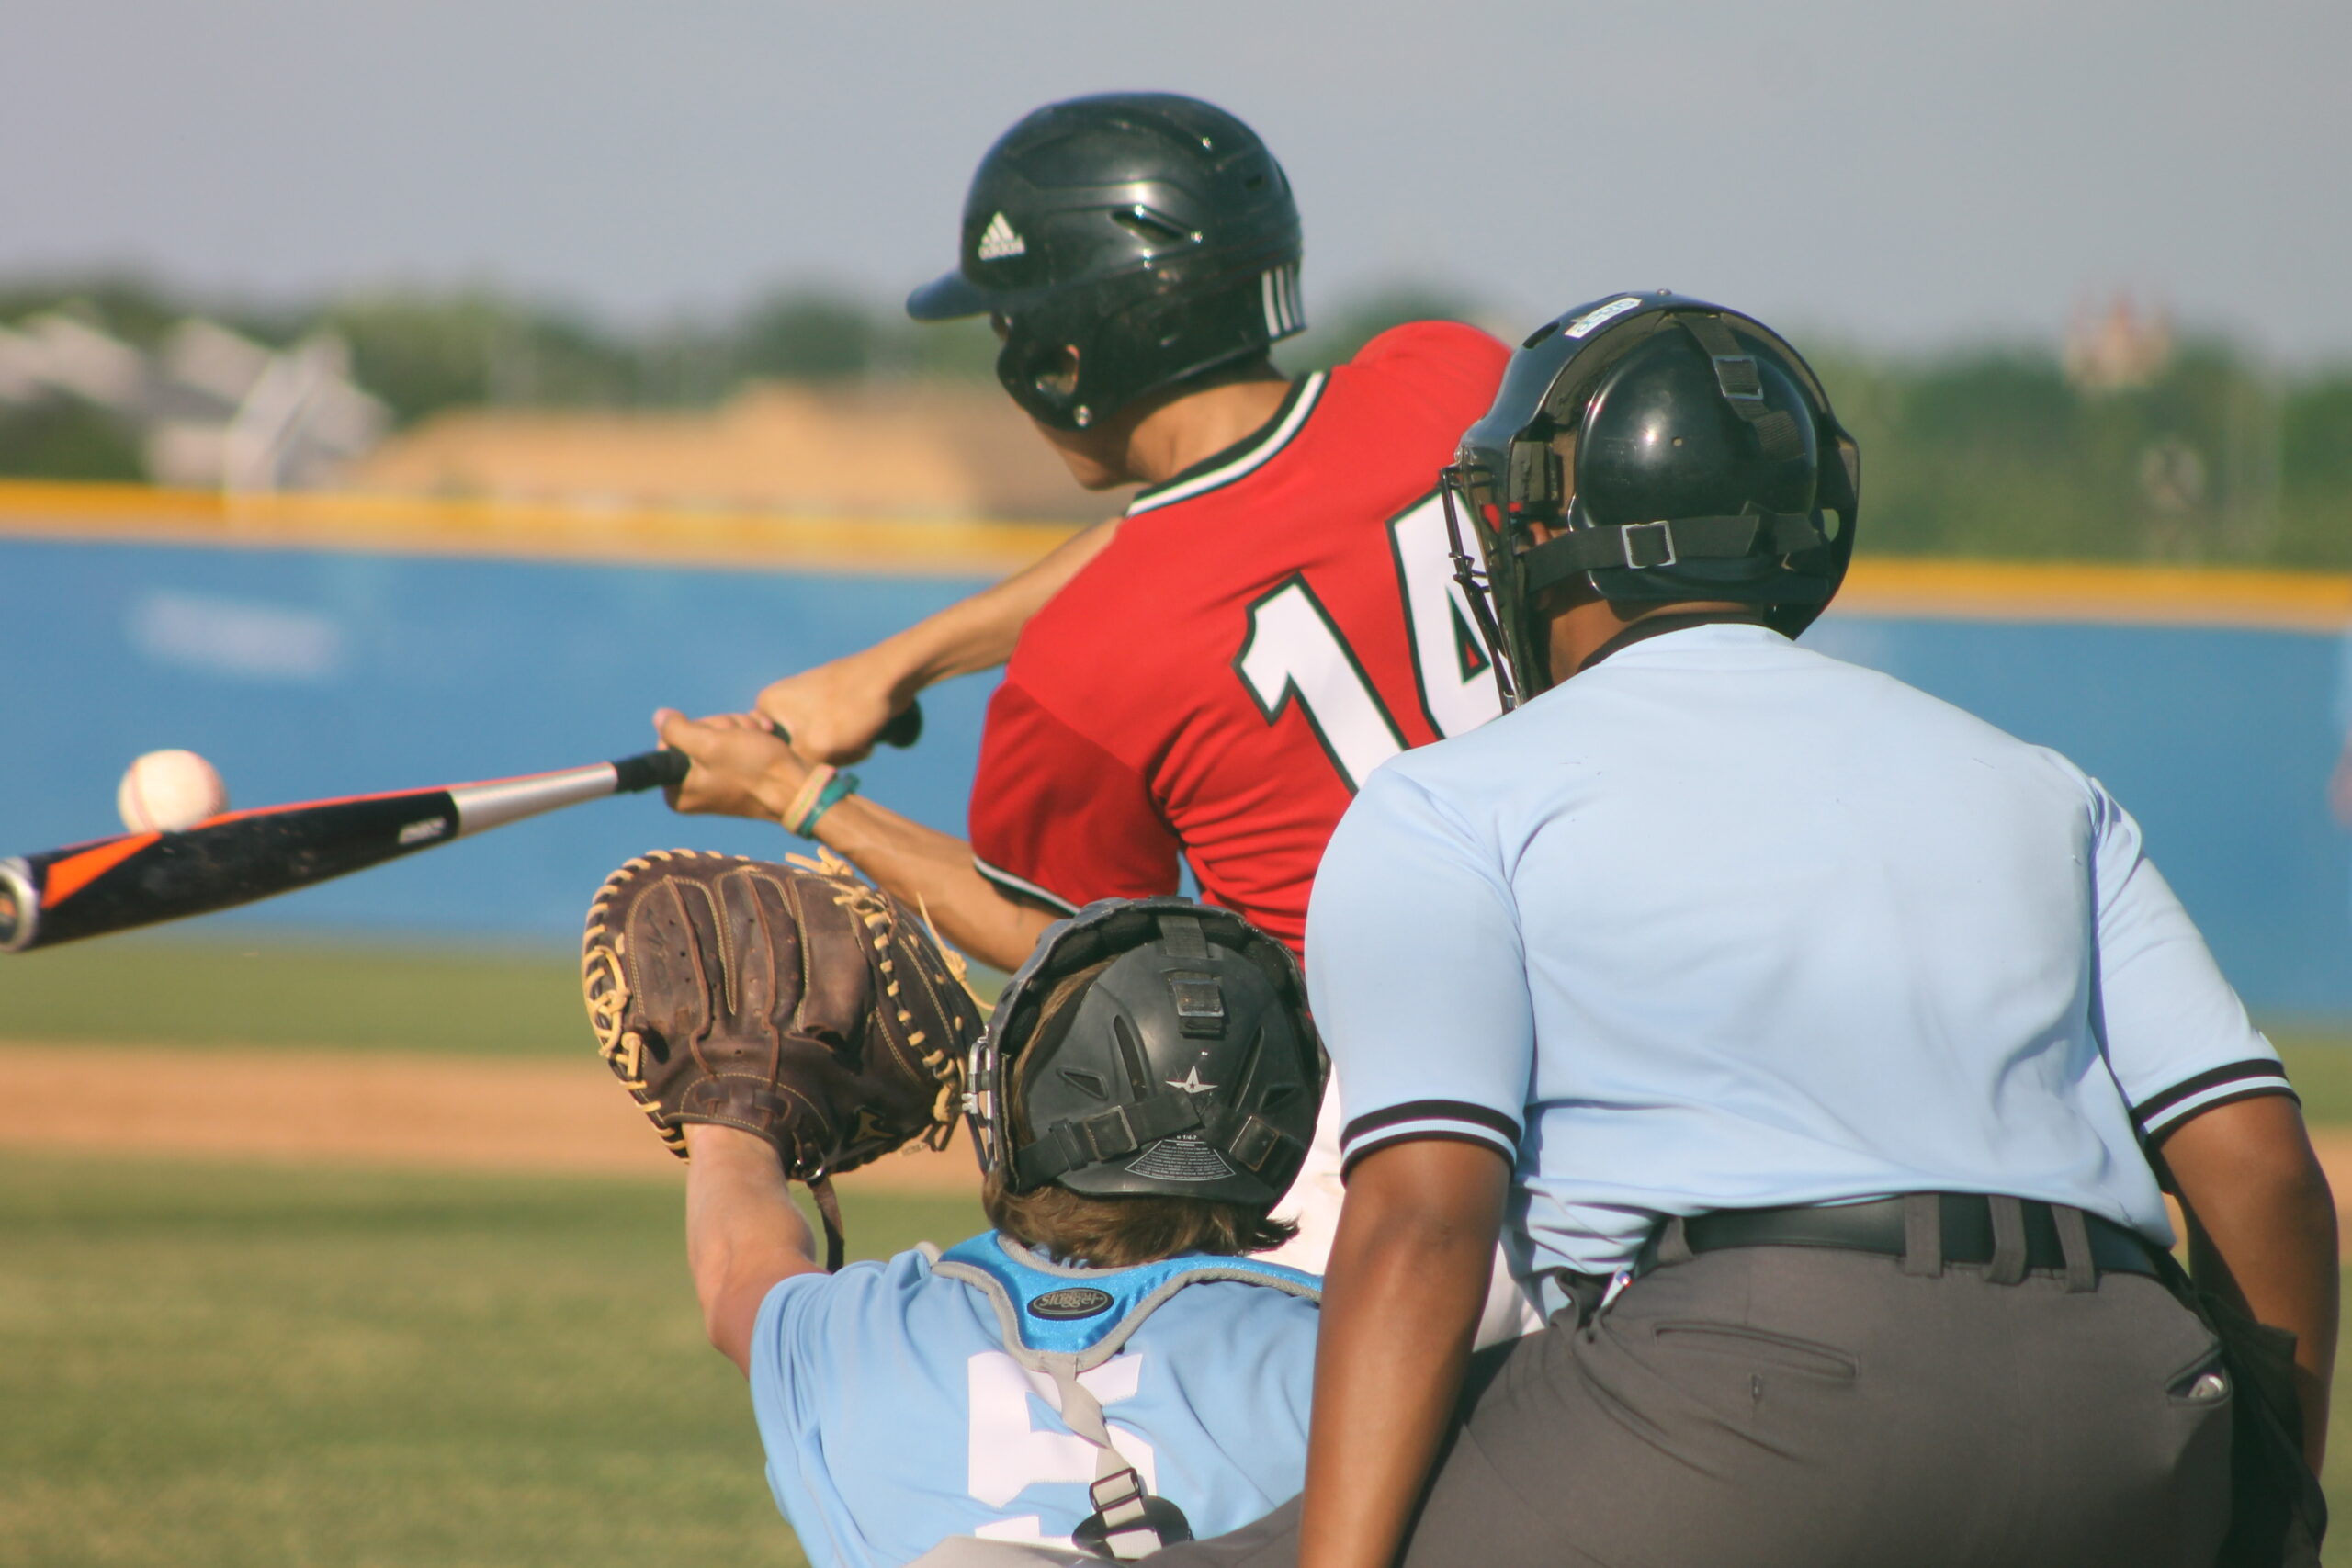 Junior varsity high school baseball player at bat connects with the baseball